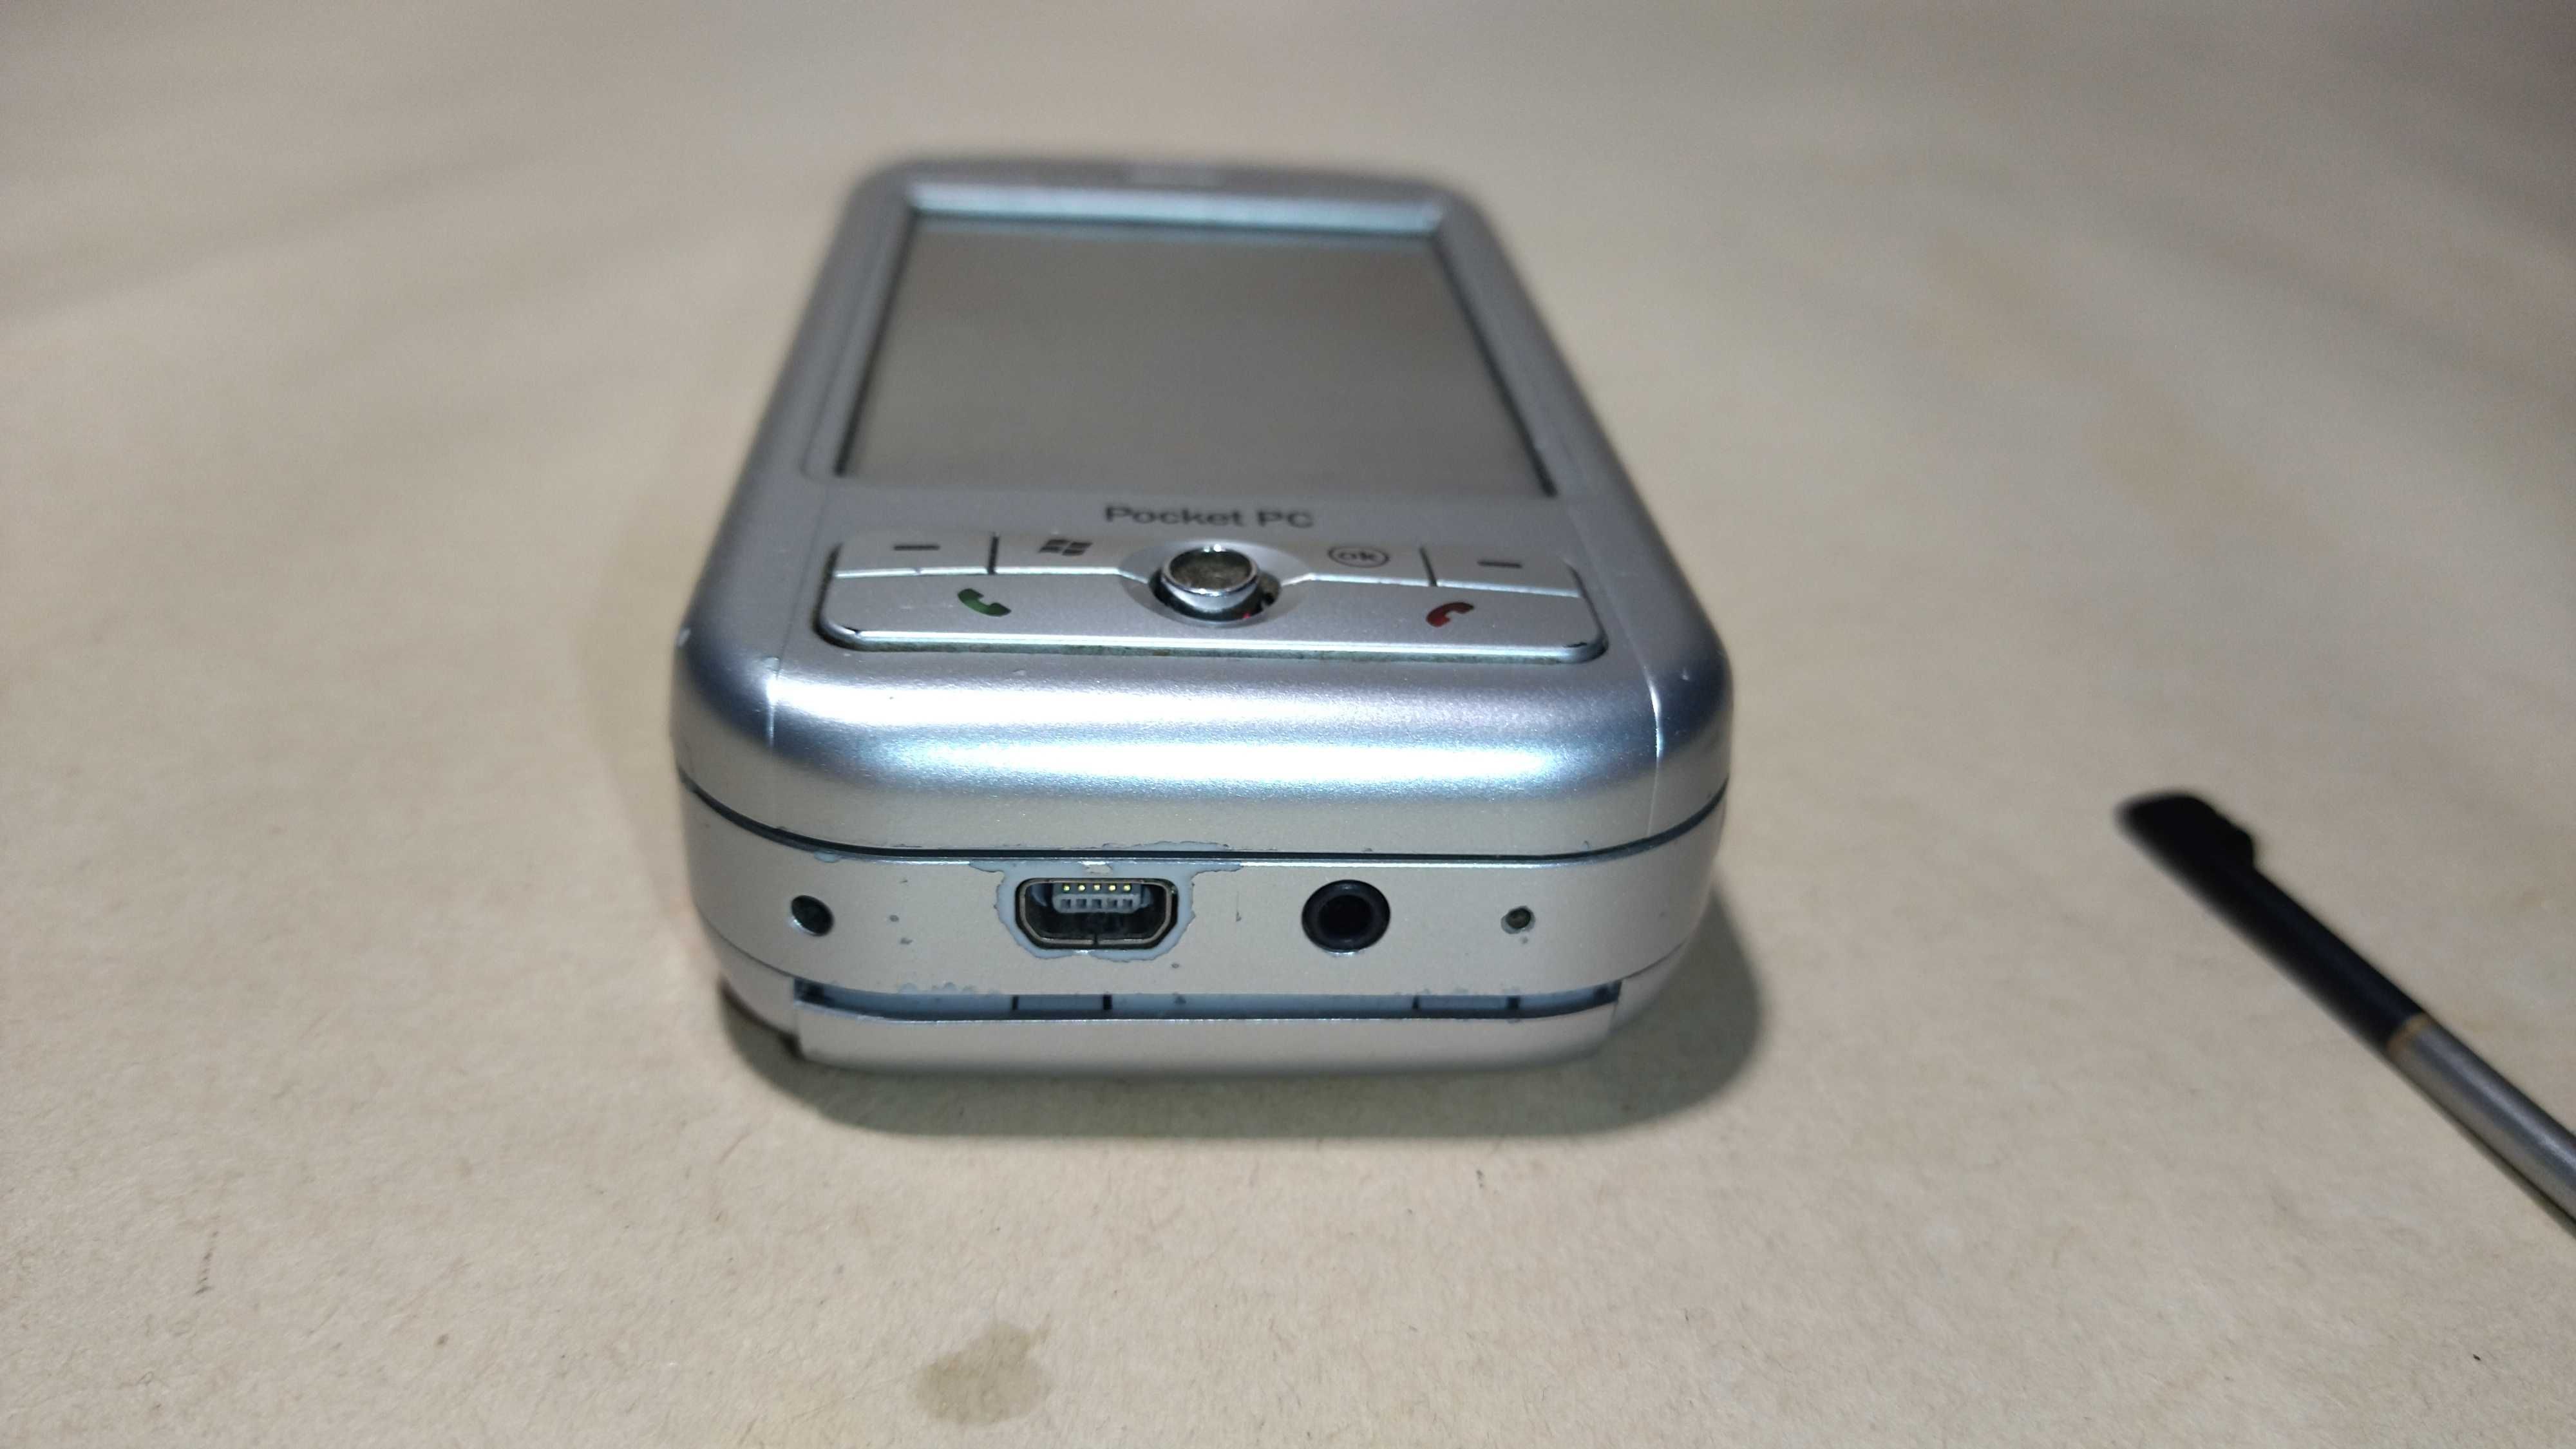 Винтажный смартфон UTStarcom PPC6700, карманный компьютер 2005